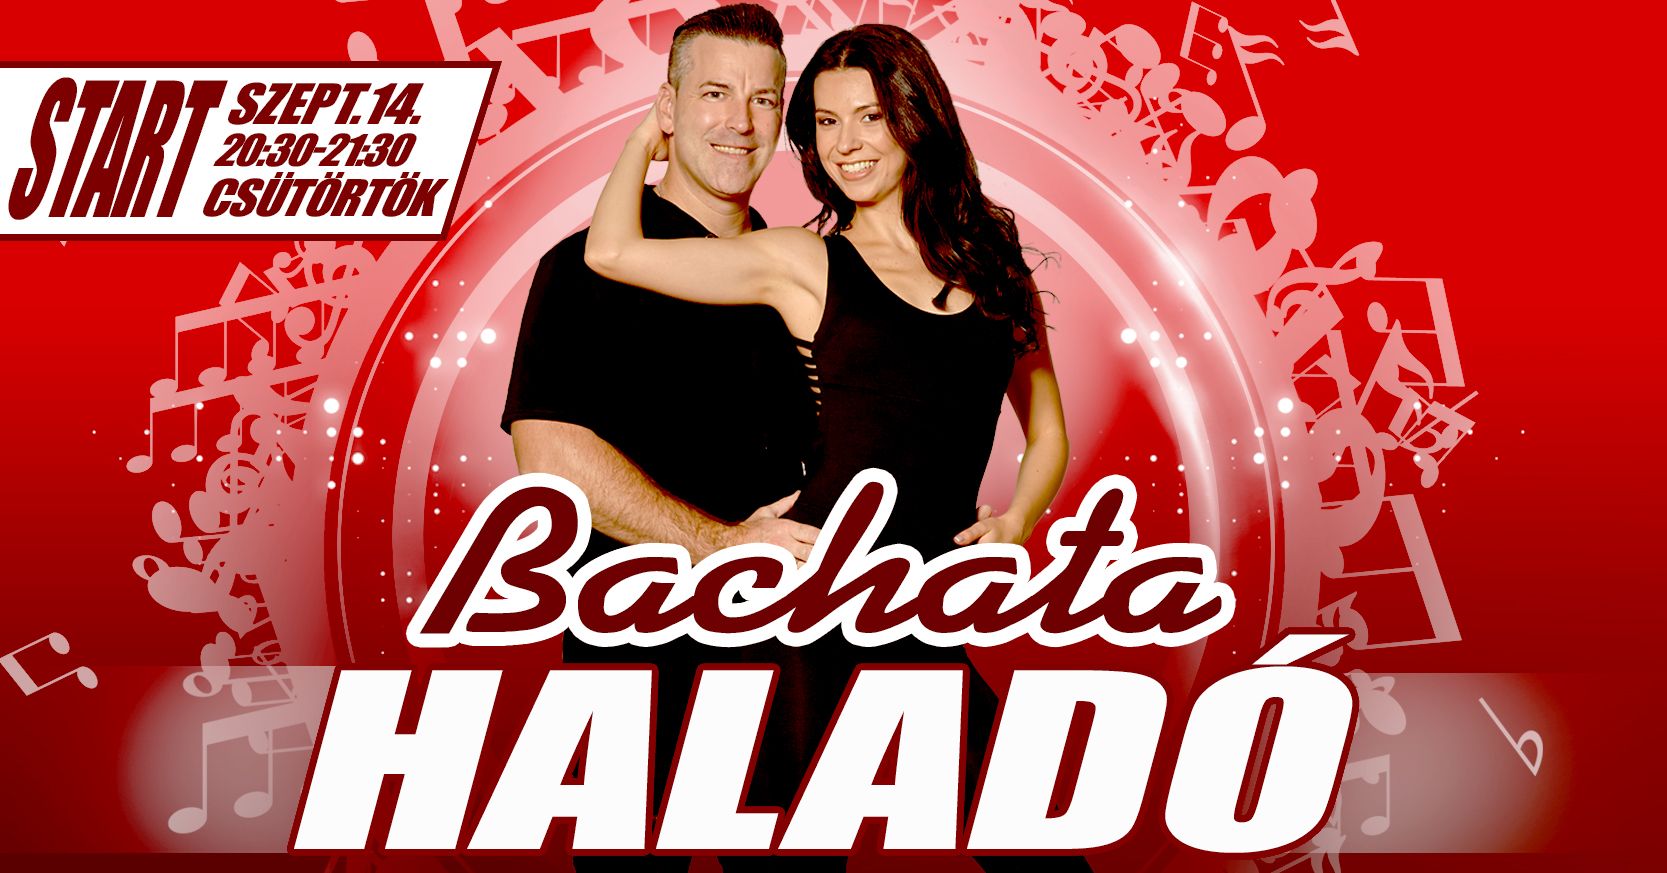 Haladó bachata tanfolyam - Royal Dance Studio 2023 szeptember